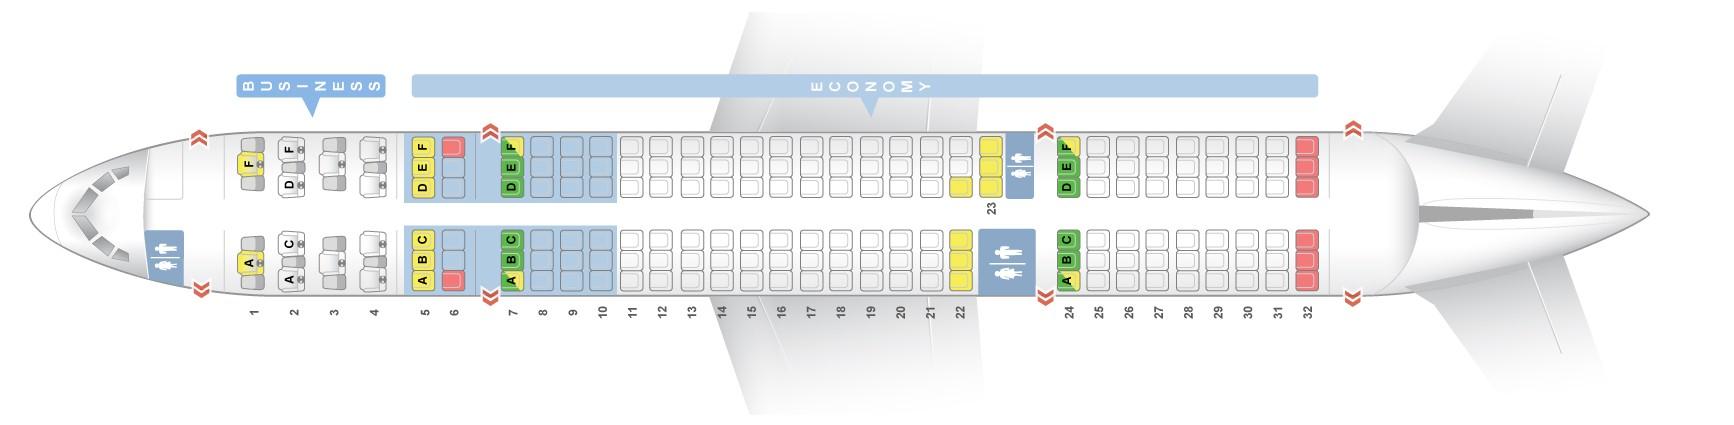 Aer Lingus Seating Chart